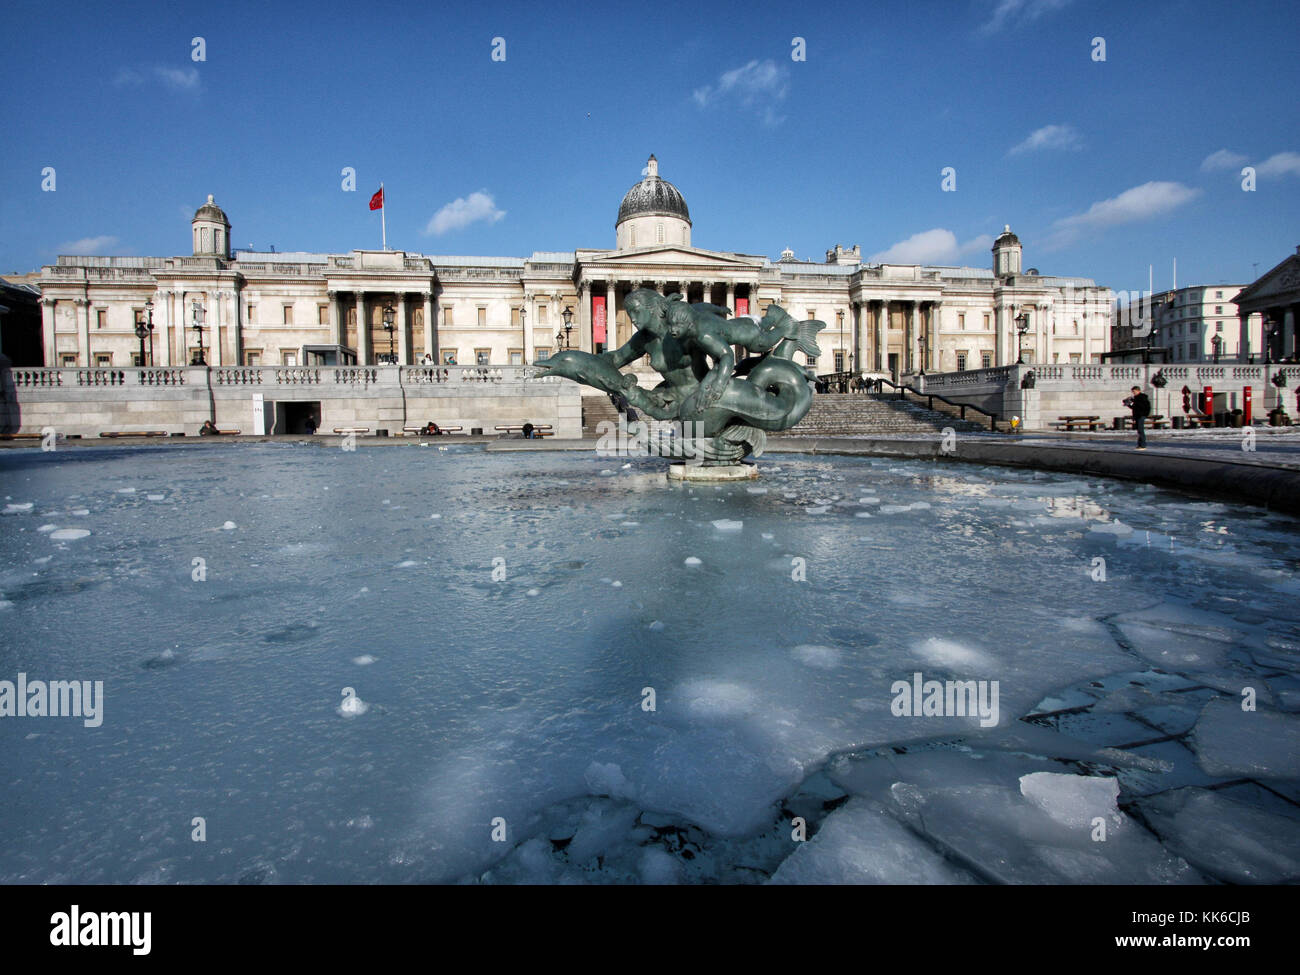 Frozen fountain in Trafalgar Square, London Stock Photo